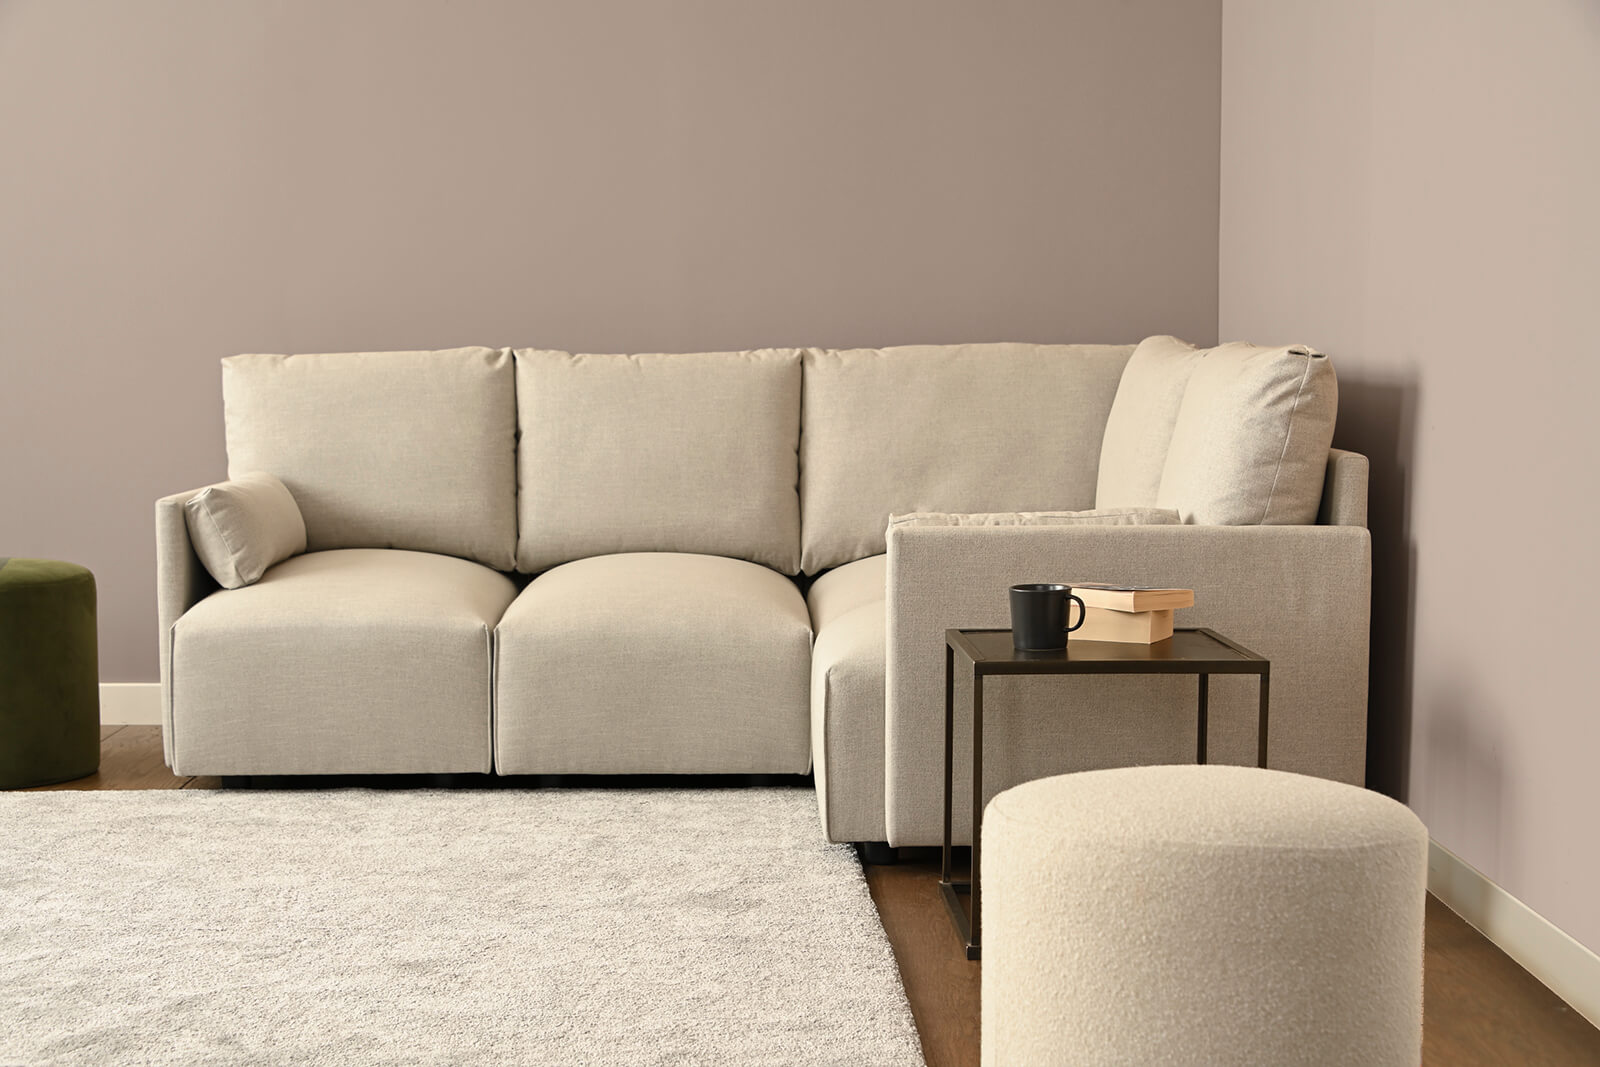 HB04-small-corner-sofa-front-coconut-3x2-lifestyle